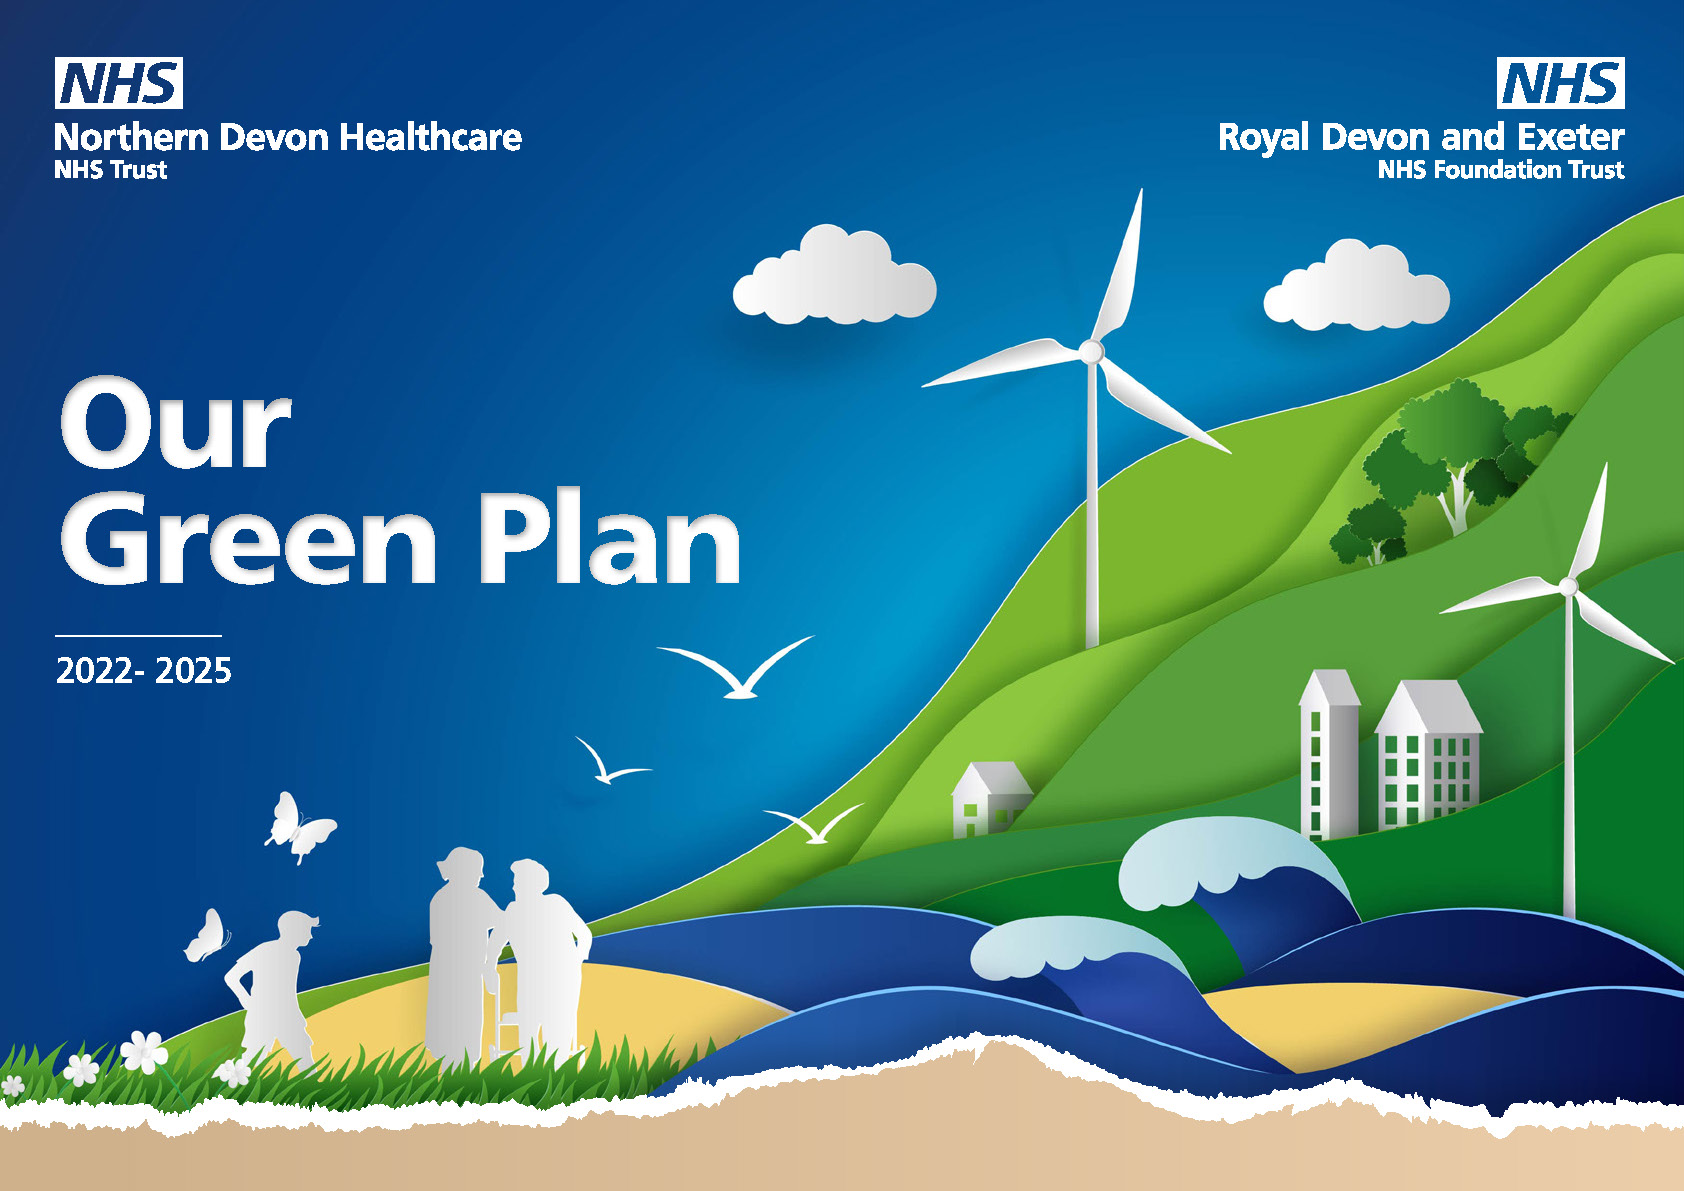 Launch of the Royal Devon’s Green Plan